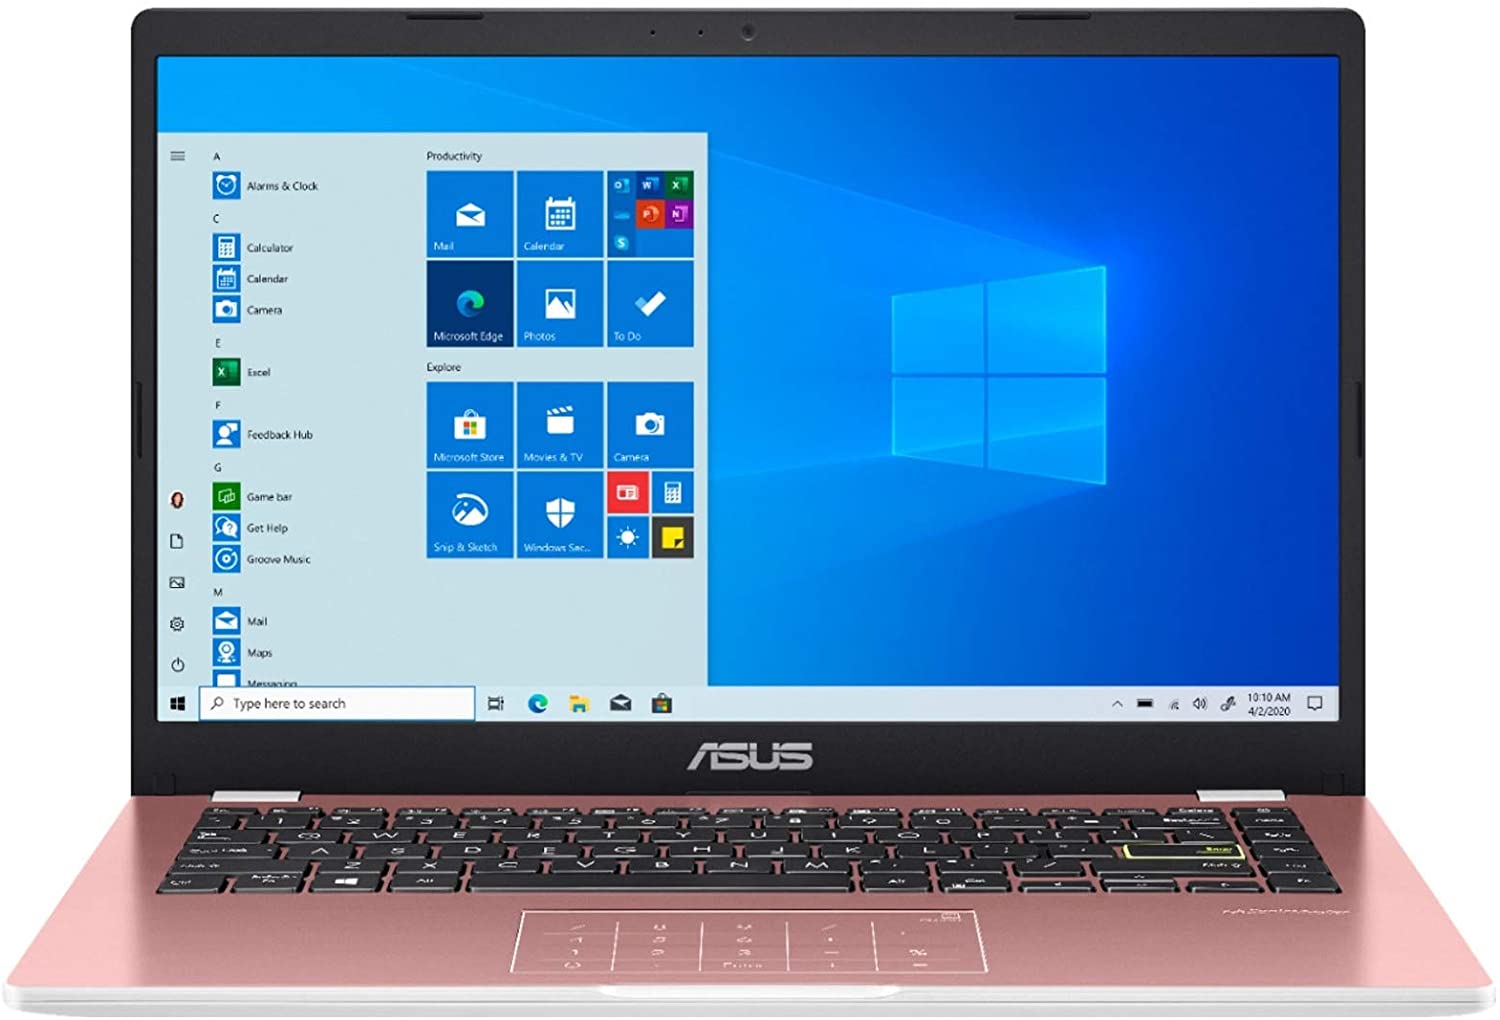 Laptop Asus E410 Intel Celeron N4020 4gb 128gb Emmc 14 Inch E410ma 202 7032